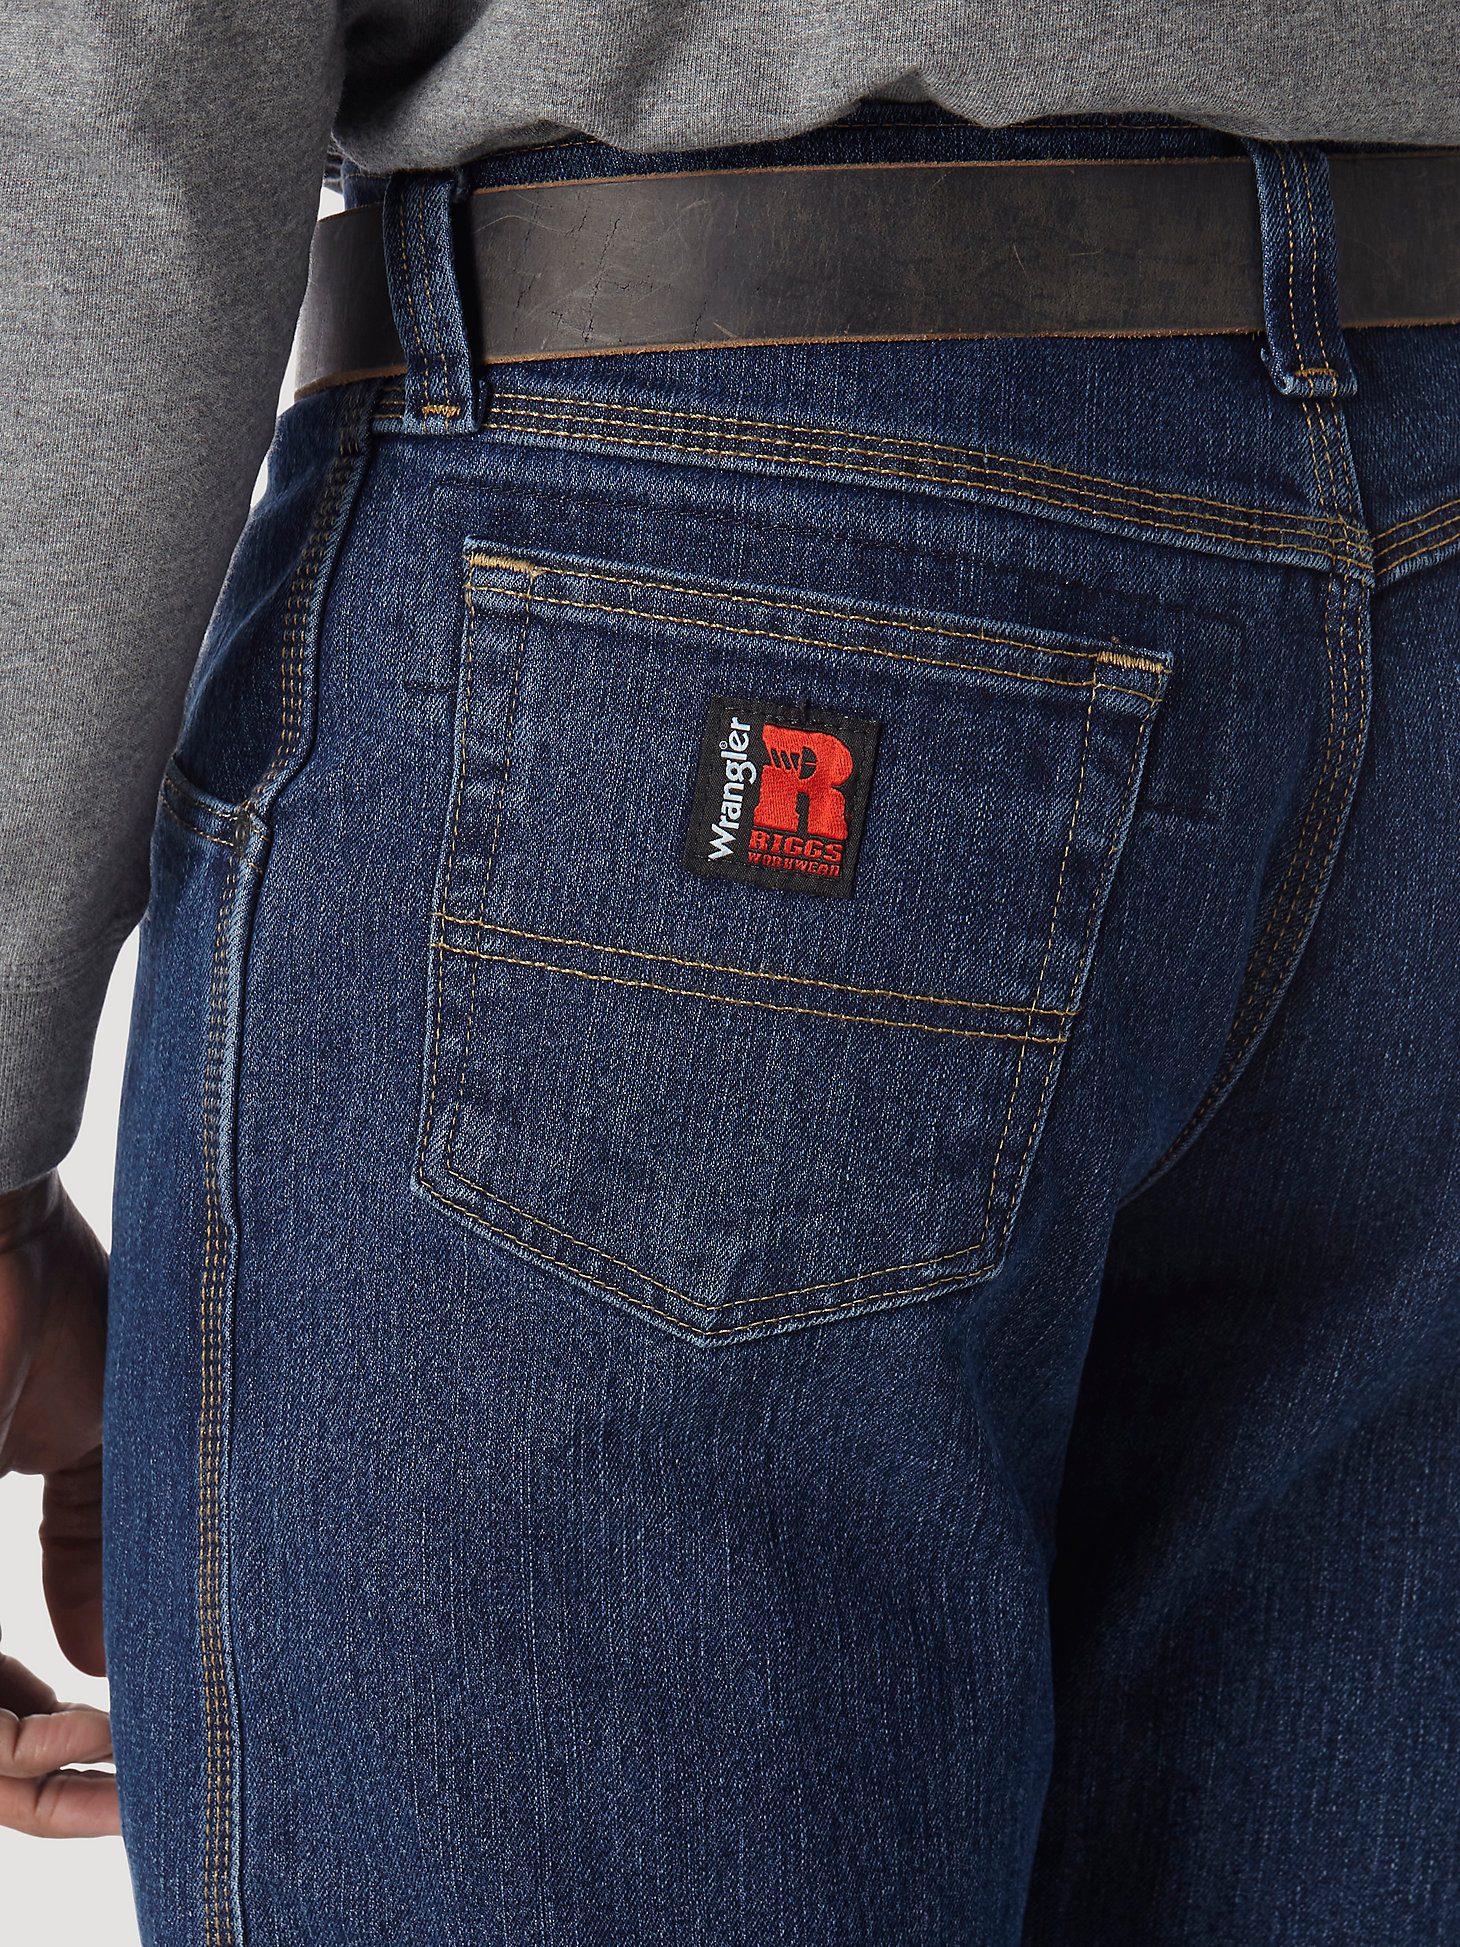 Wrangler® RIGGS Workwear® Advanced Comfort Five Pocket Jean in Mid Stone alternative view 3